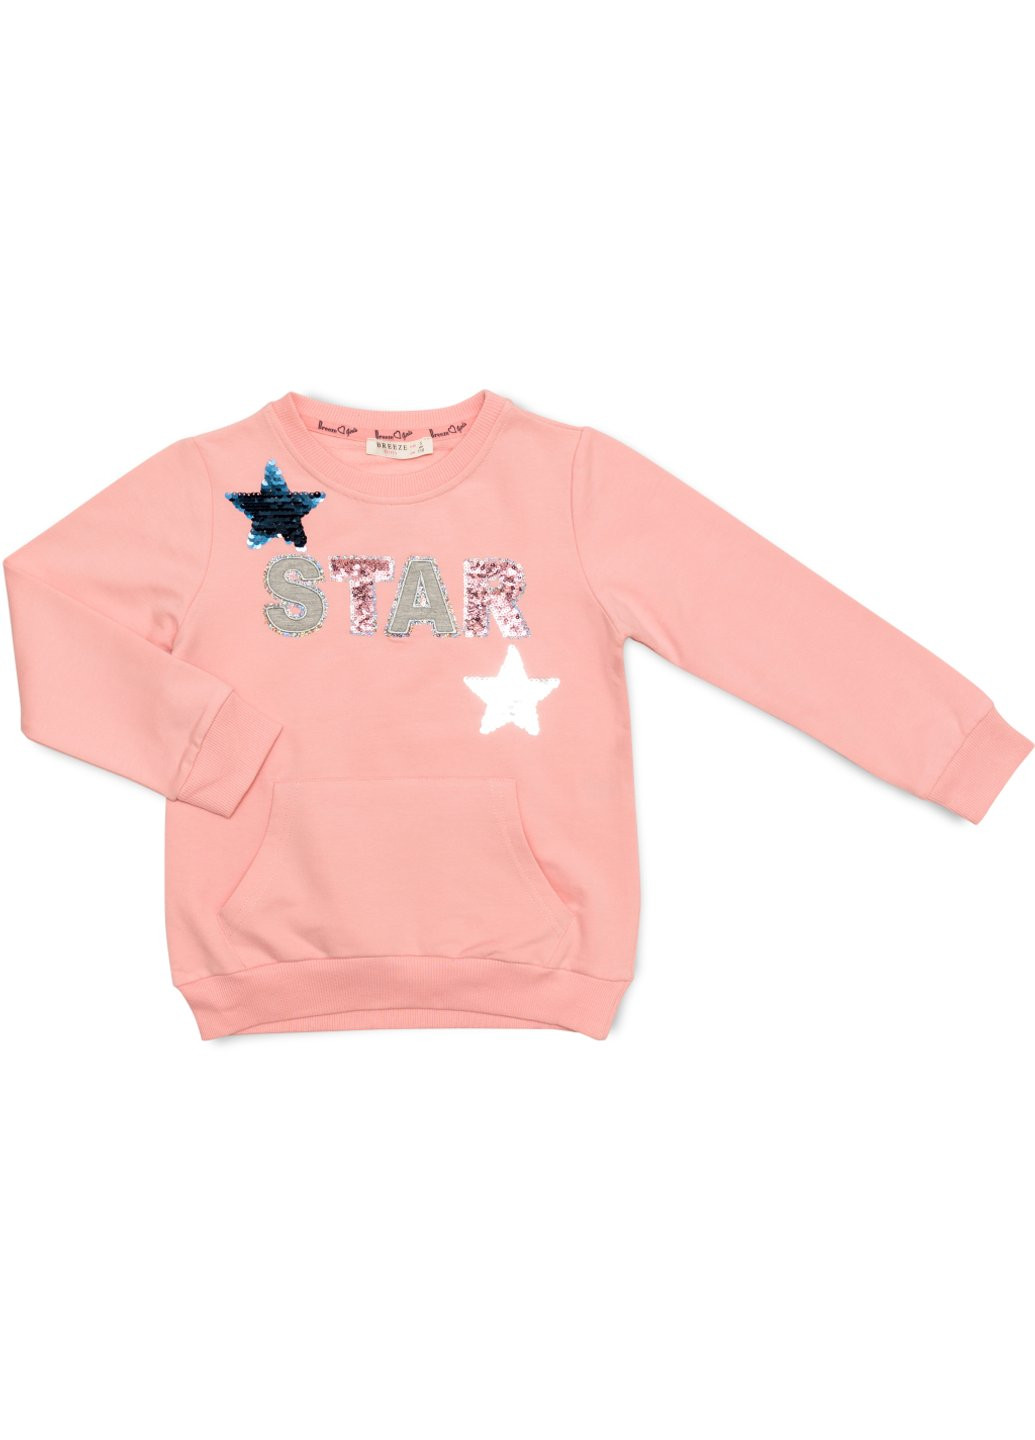 Спортивный костюм STAR (13727-116G-pink) Breeze (257208720)